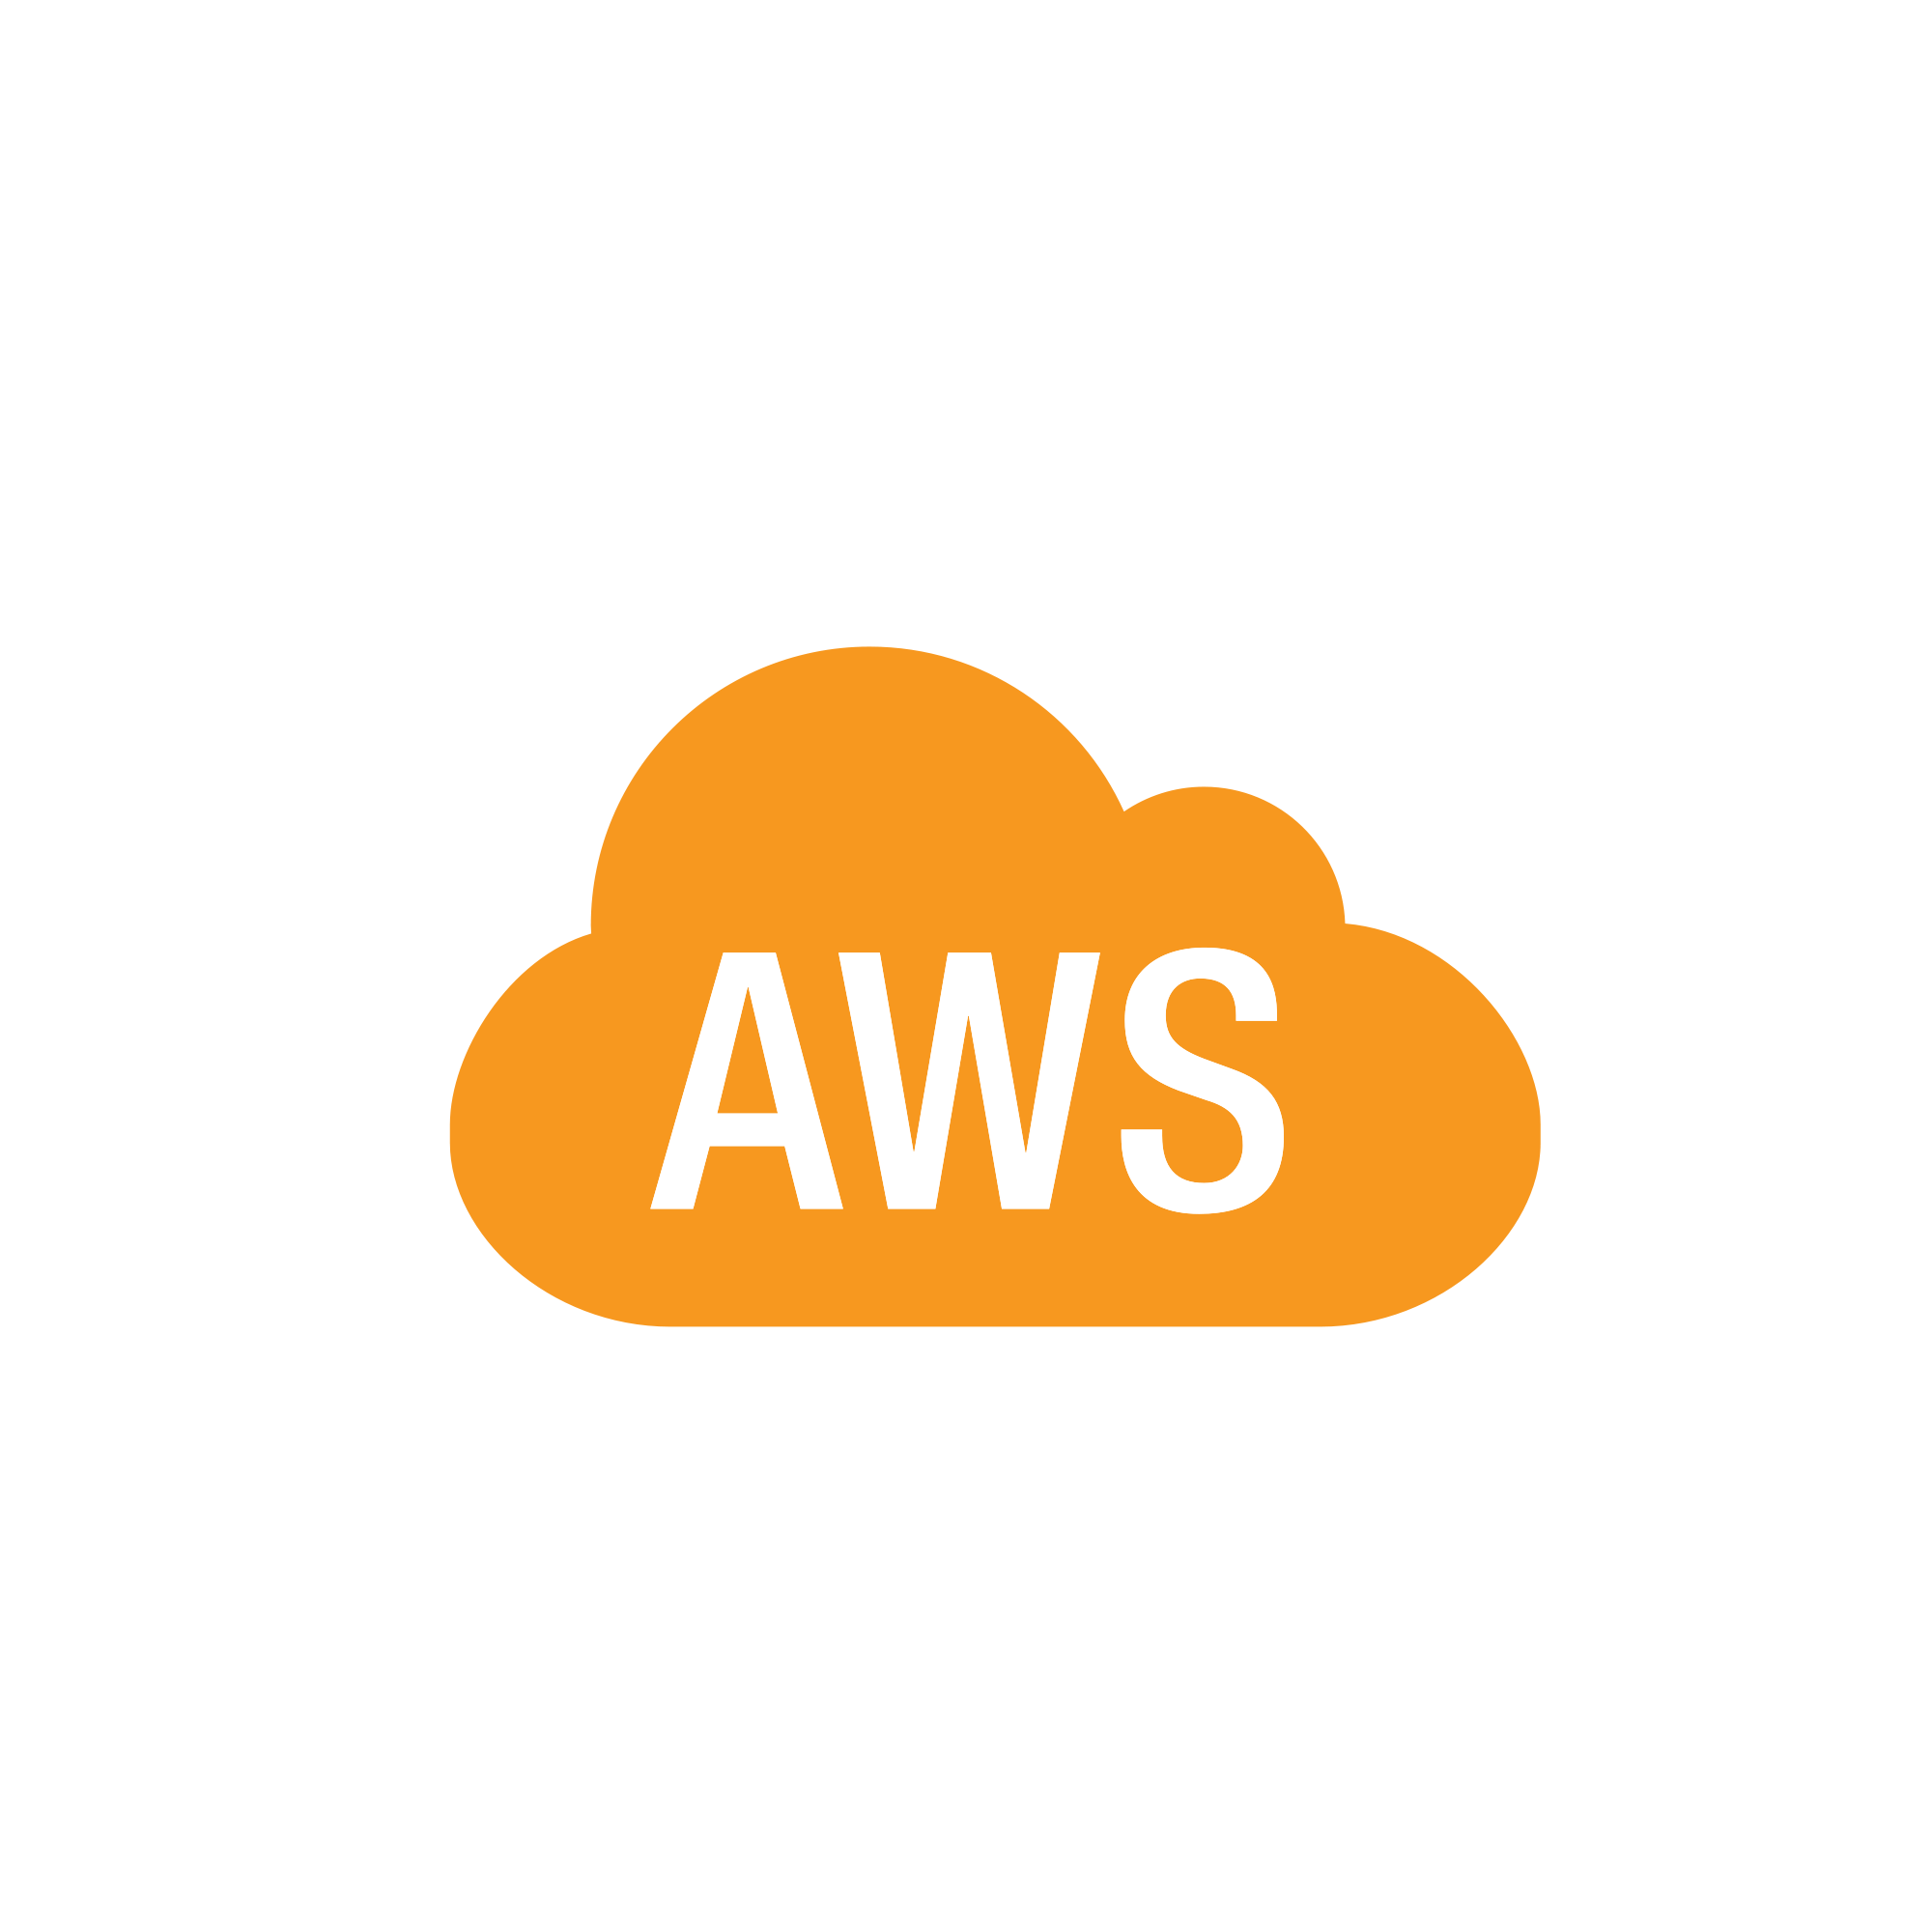 DornerWorks Virtuosity Cloud uses AWS for secure cloud computing.